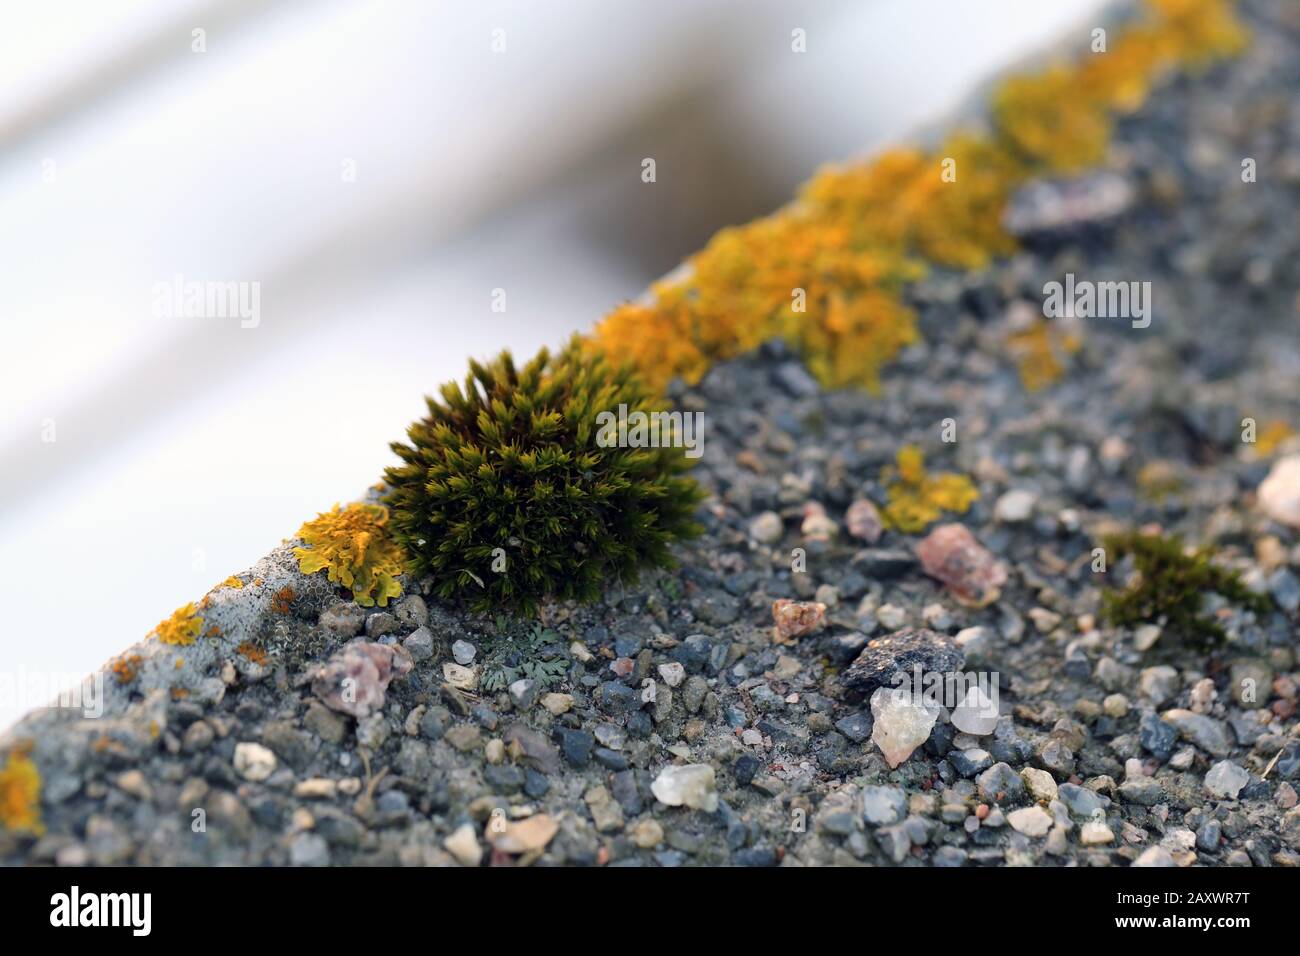 Plenty of small golden colored maritime sunburst lichen (xanthoria parietina) with green moss and some small rocks. Closeup / macro image. Stock Photo